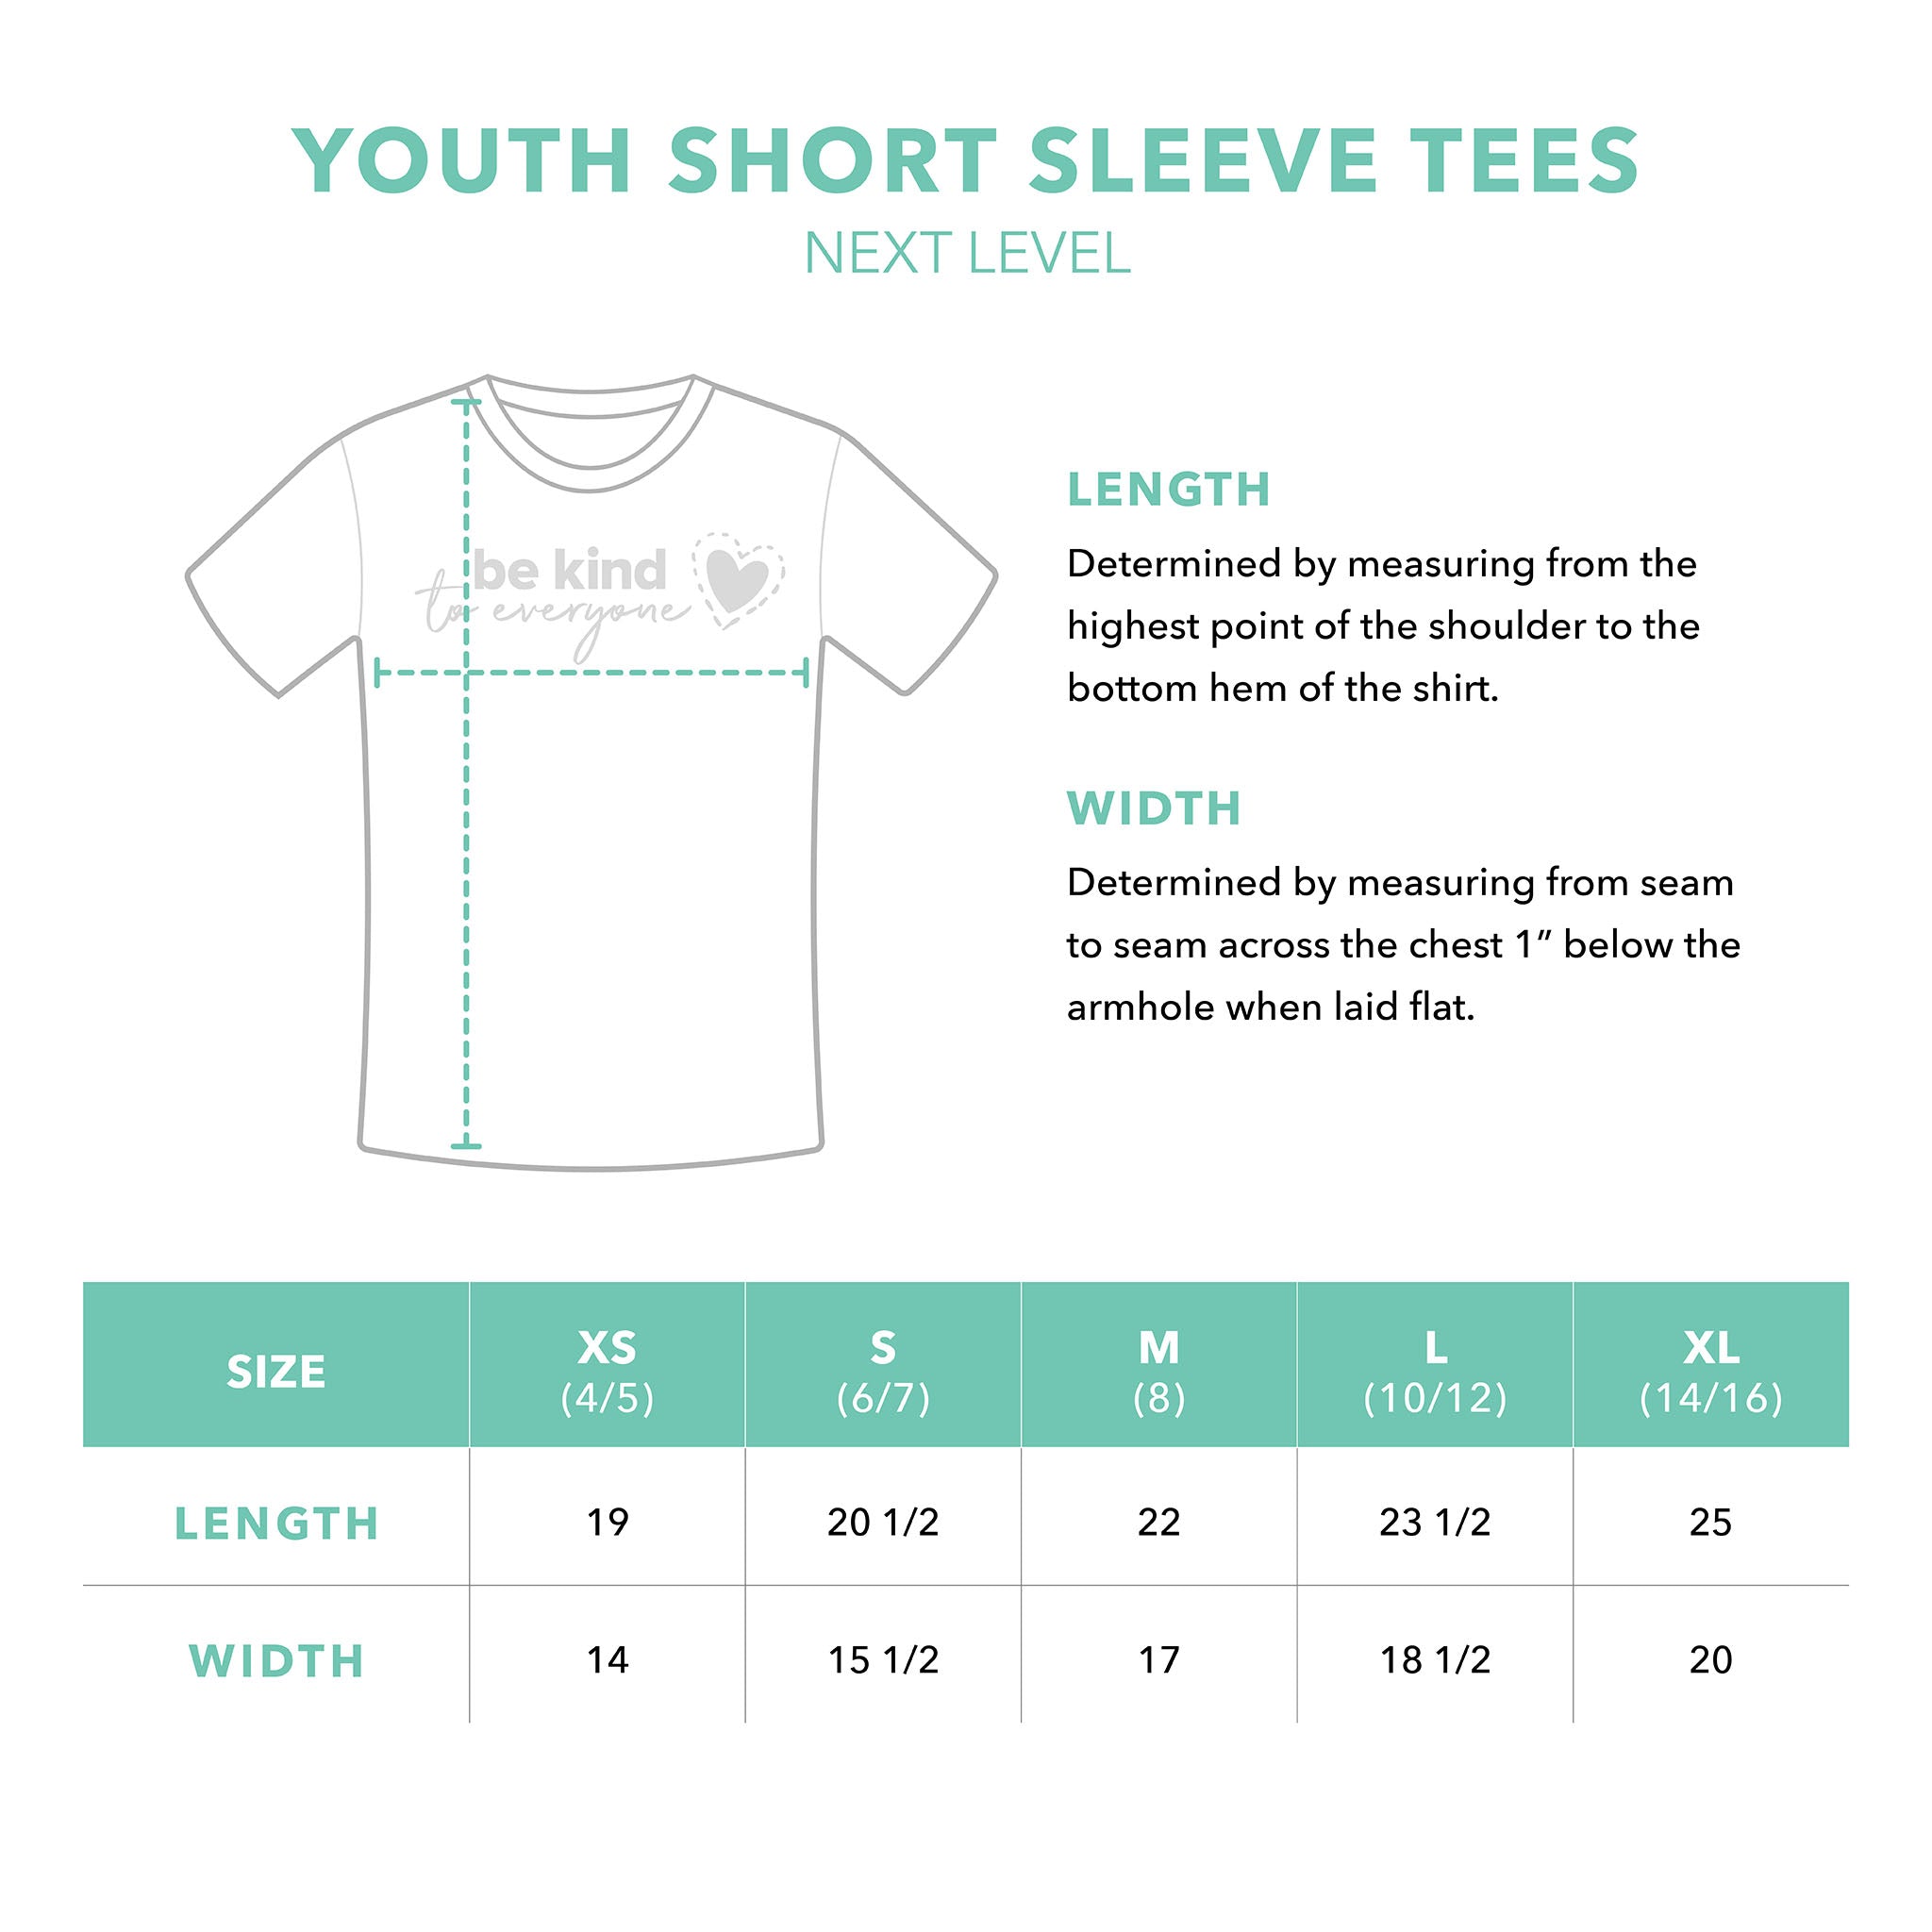 Youth Short Sleeve Sizing Guide